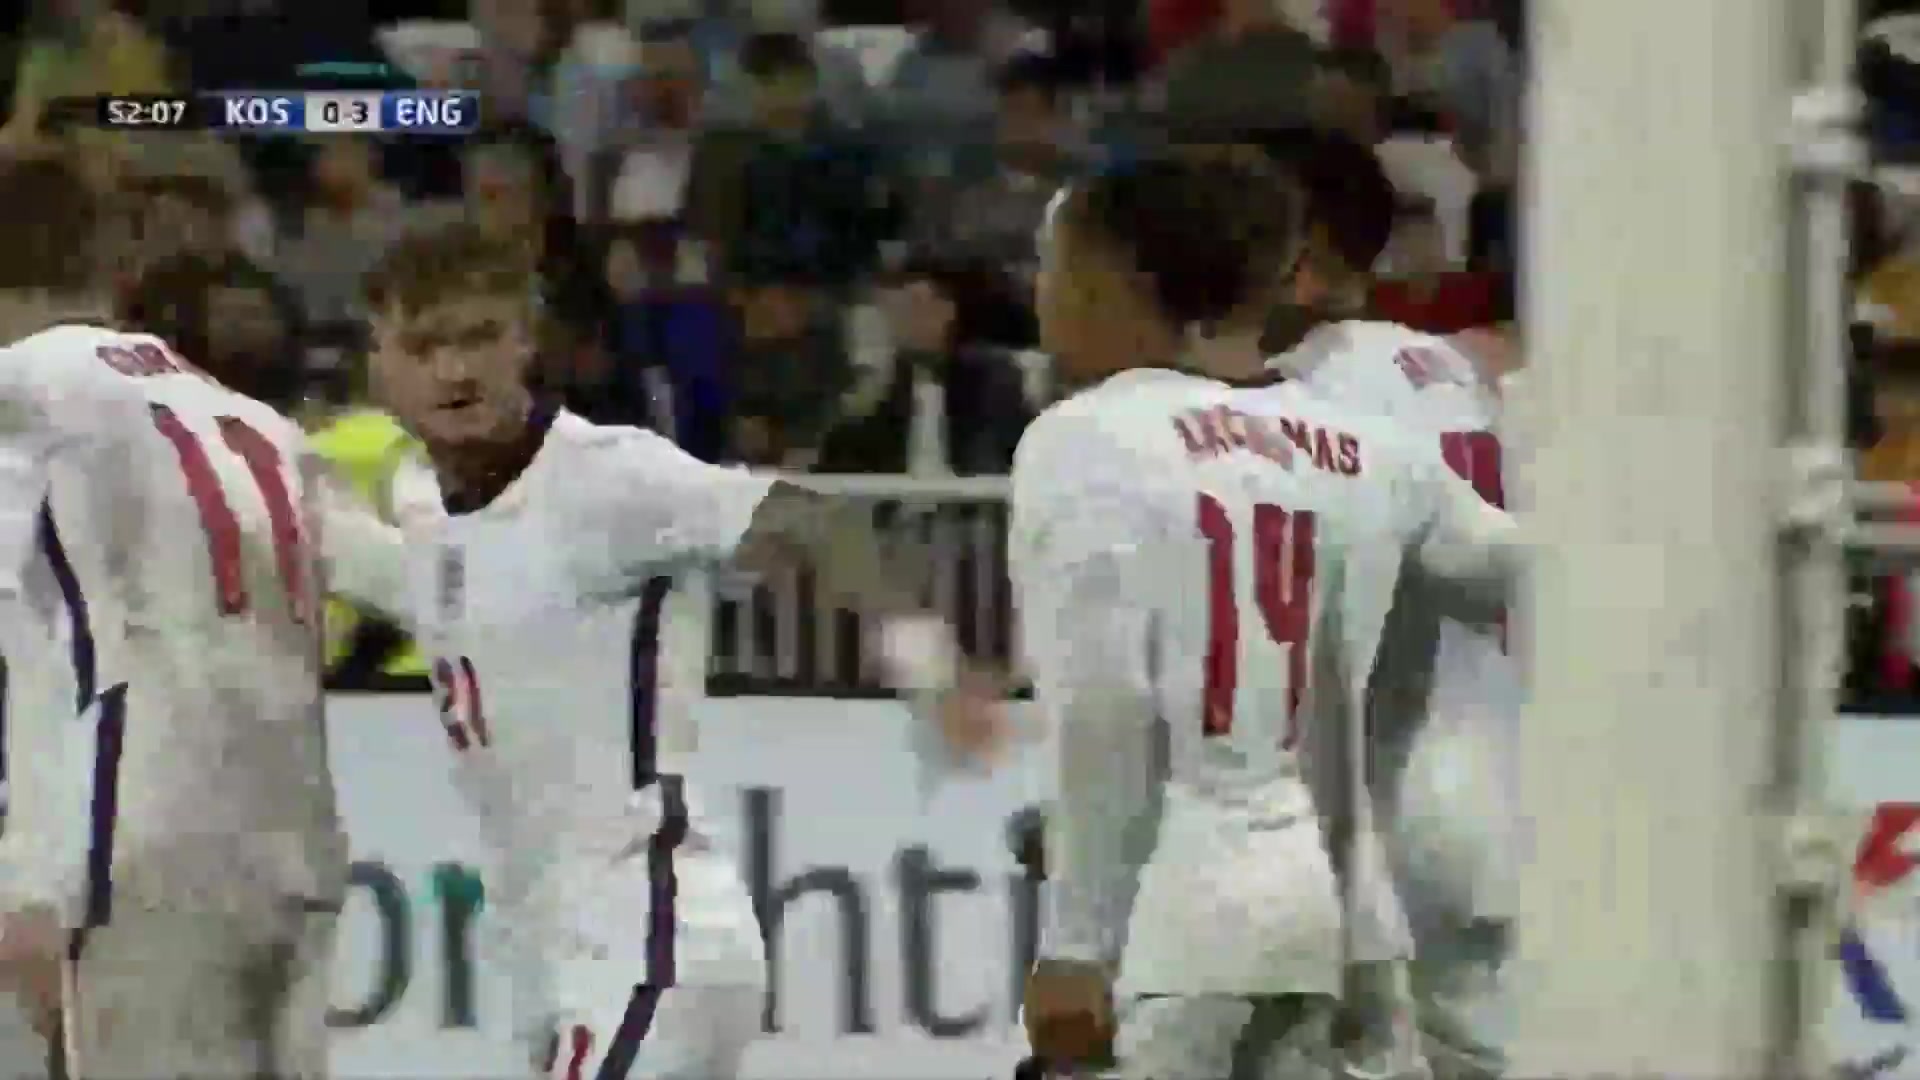 UEFA  U21Q Kosovo U21 Vs England U21 Cameron Archer Goal in 52 min, Score 0:3